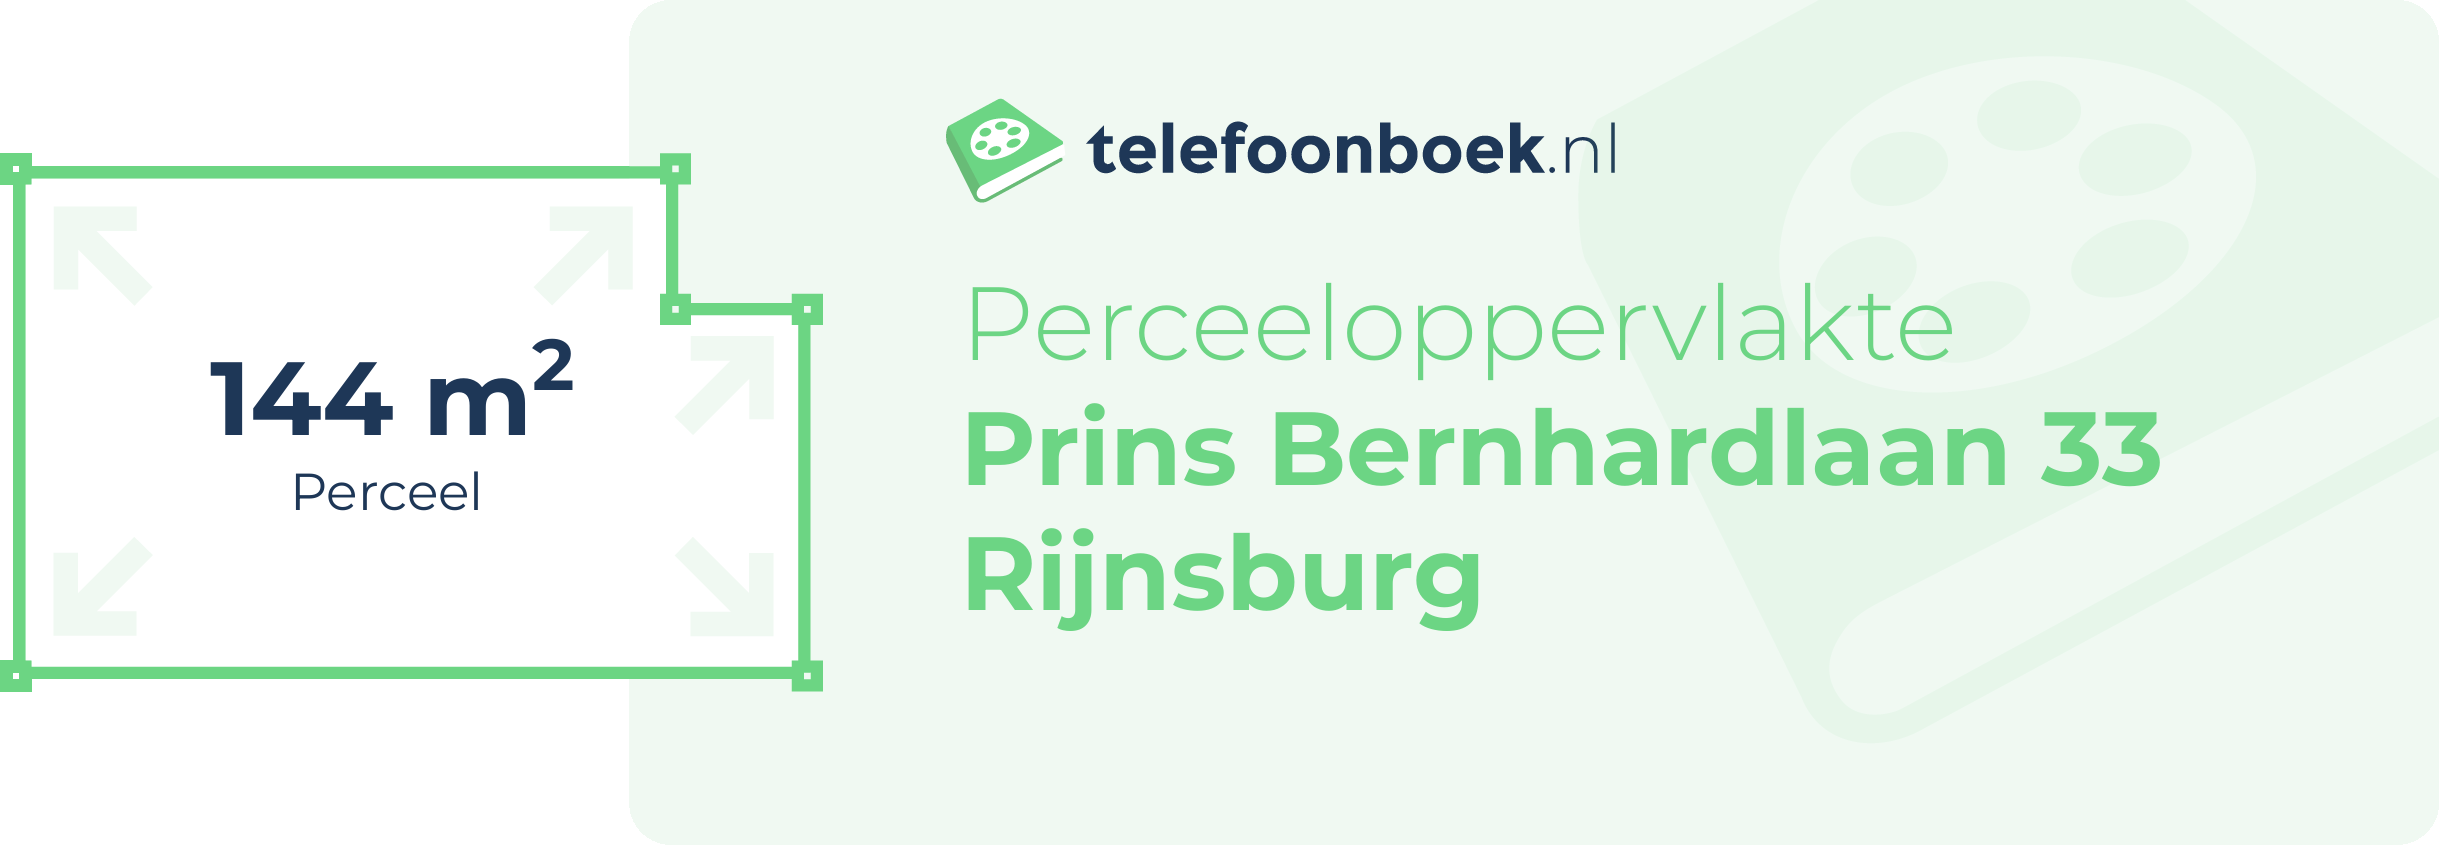 Perceeloppervlakte Prins Bernhardlaan 33 Rijnsburg